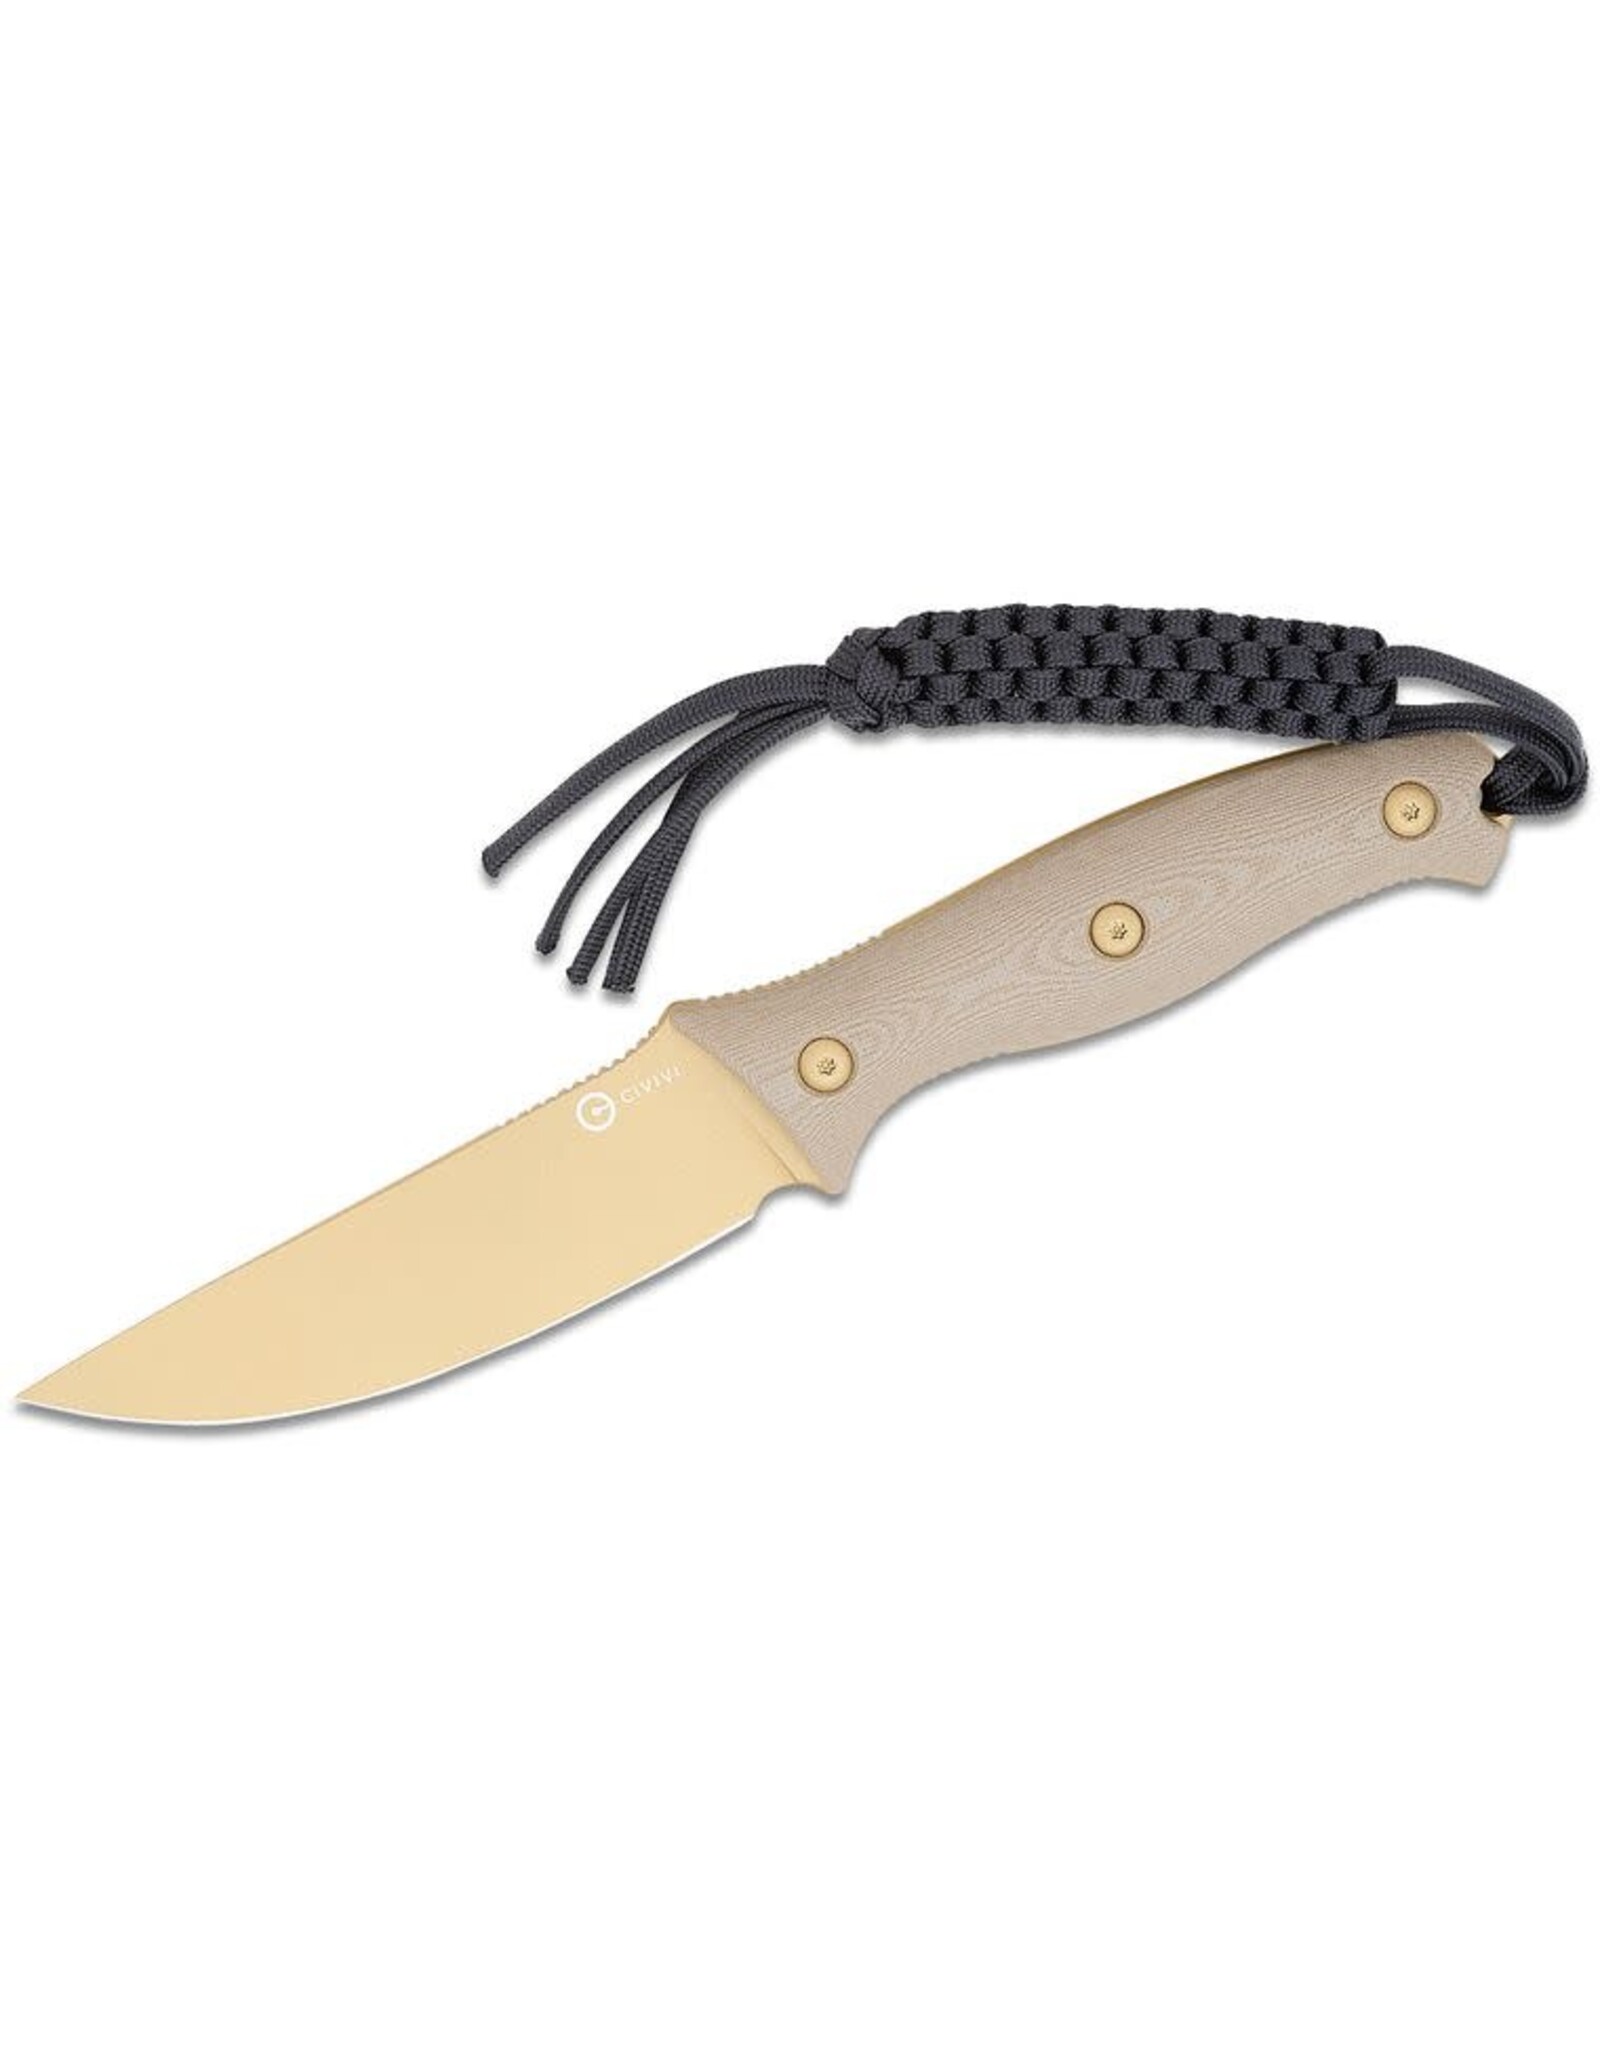 Civivi CIVIVI Knives Stormridge Fixed Blade Knife 3.92" Nitro-V Desert Tan Stonewashed Straight Back Blade, Contoured Tan G10 Handles, Kydex Sheath - C23041-2